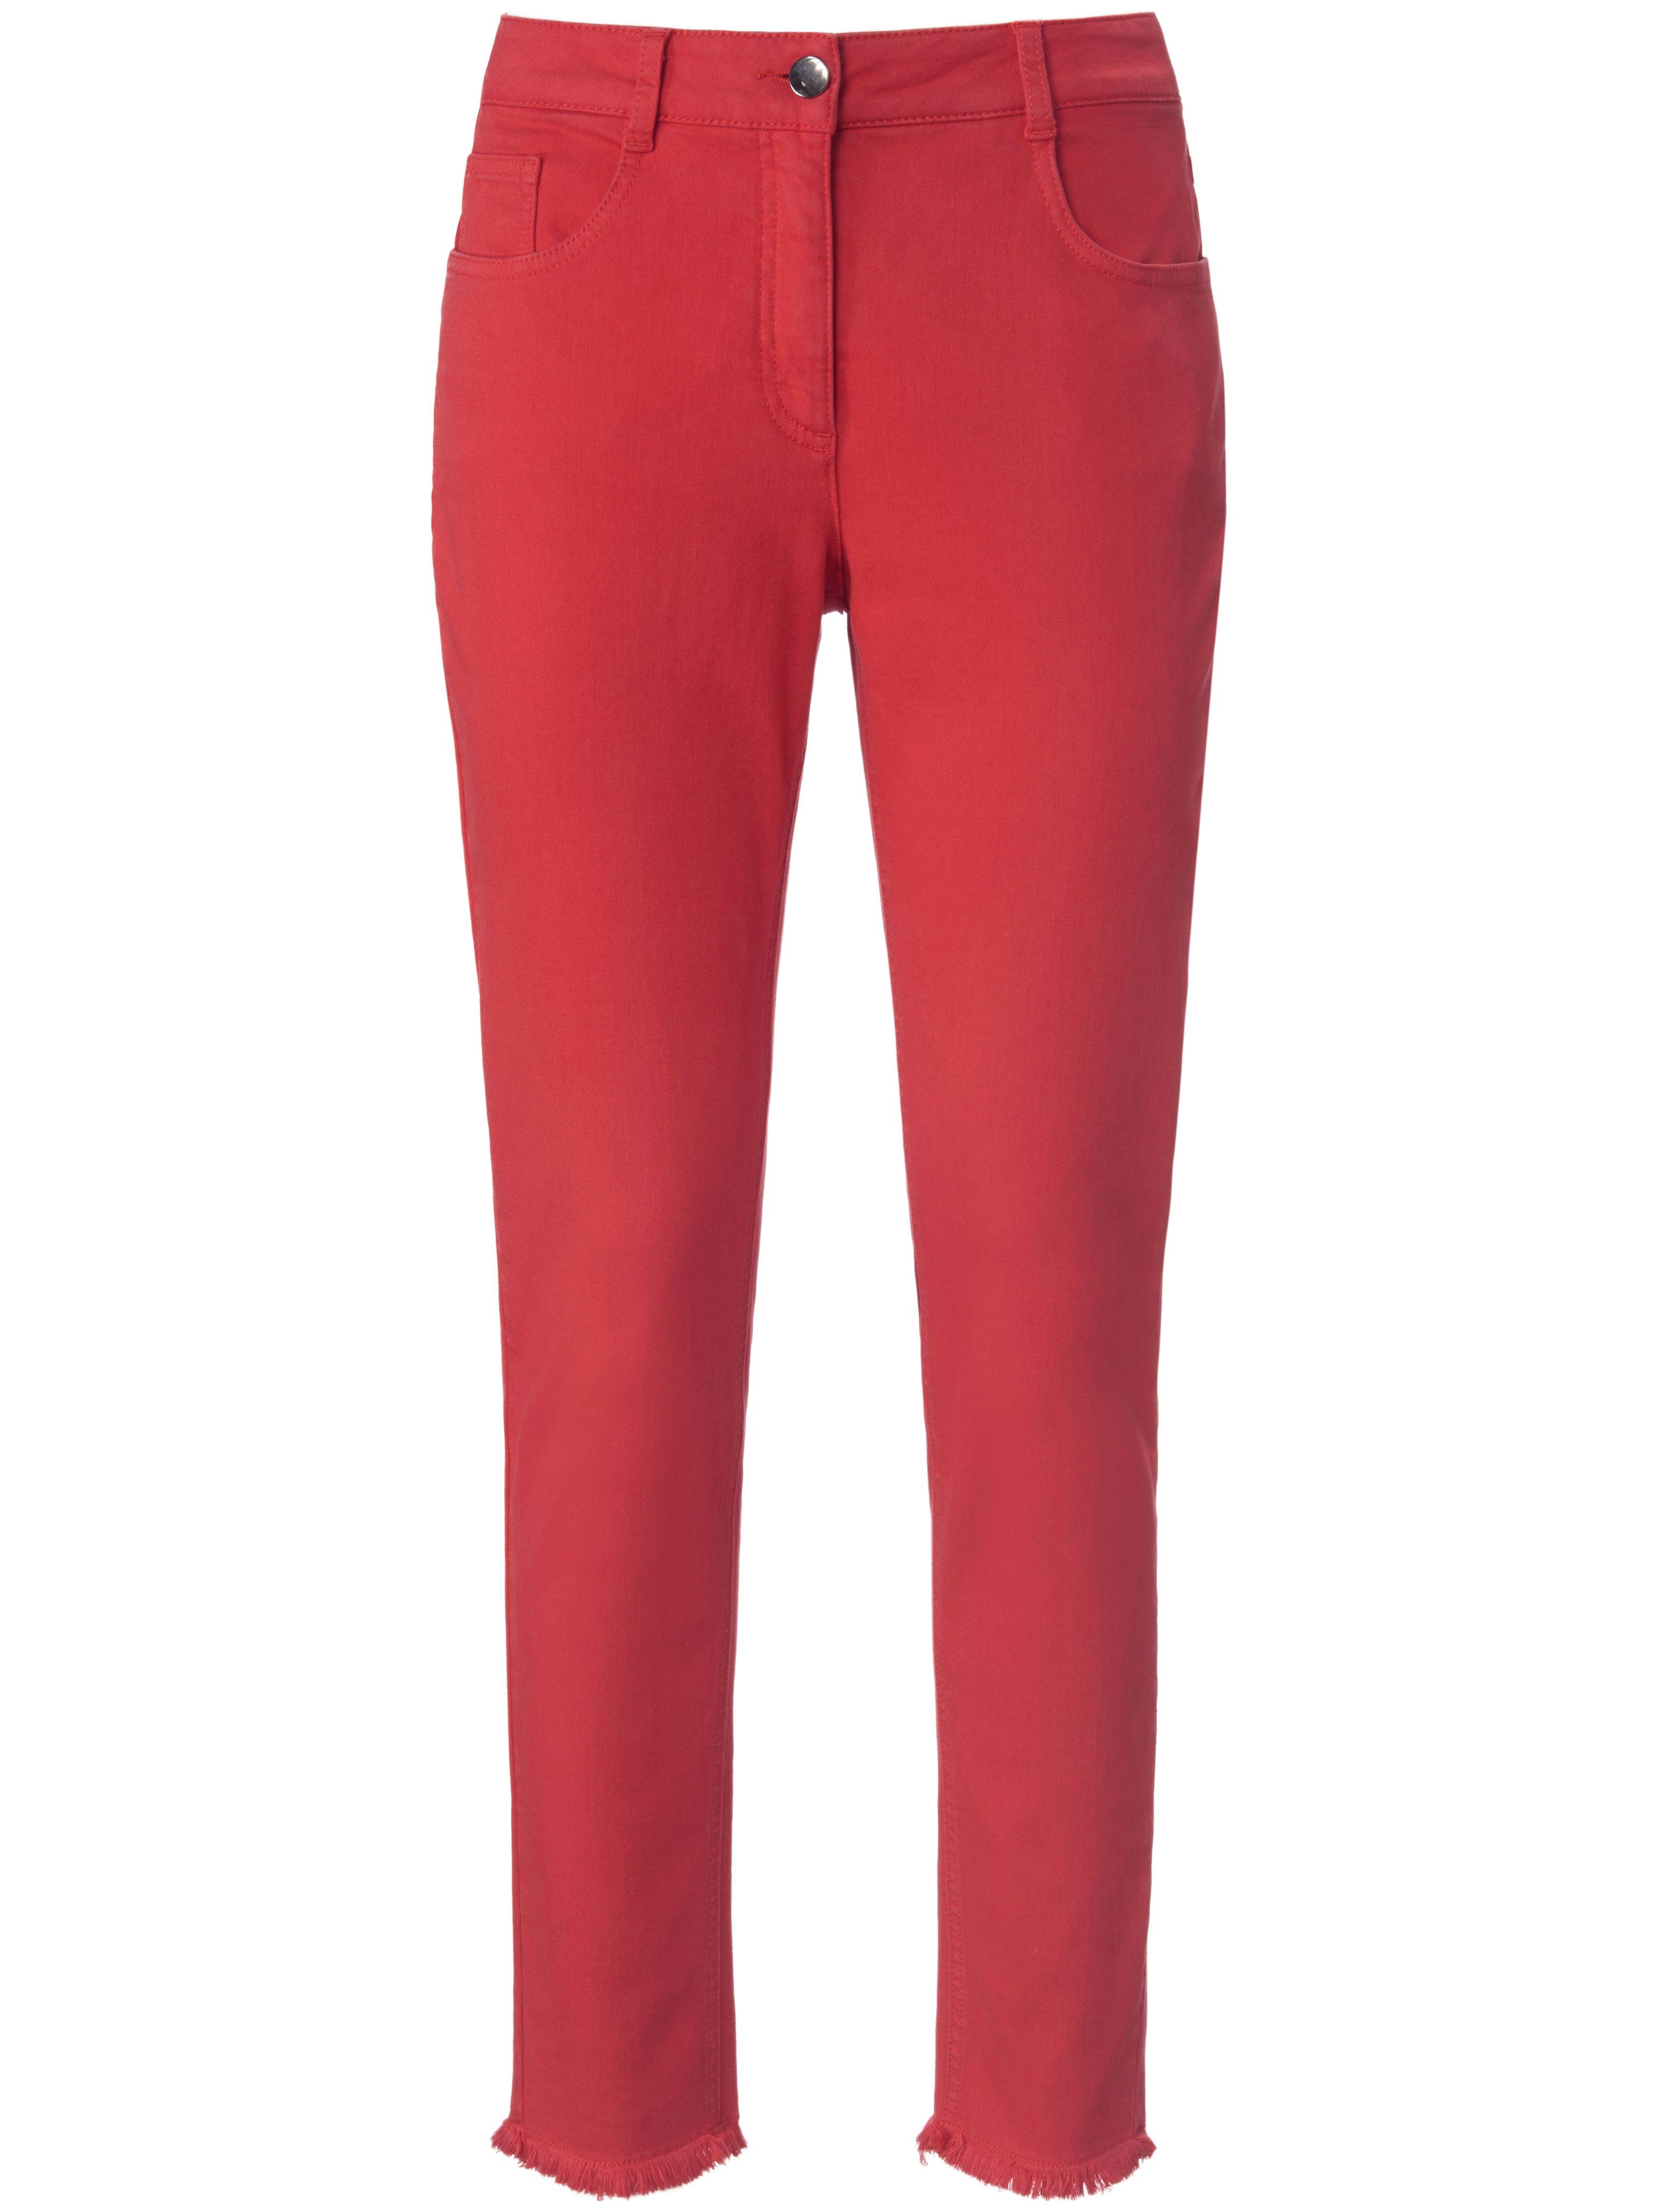 Jeans in smal 5-pocketsmodel Van MYBC rood